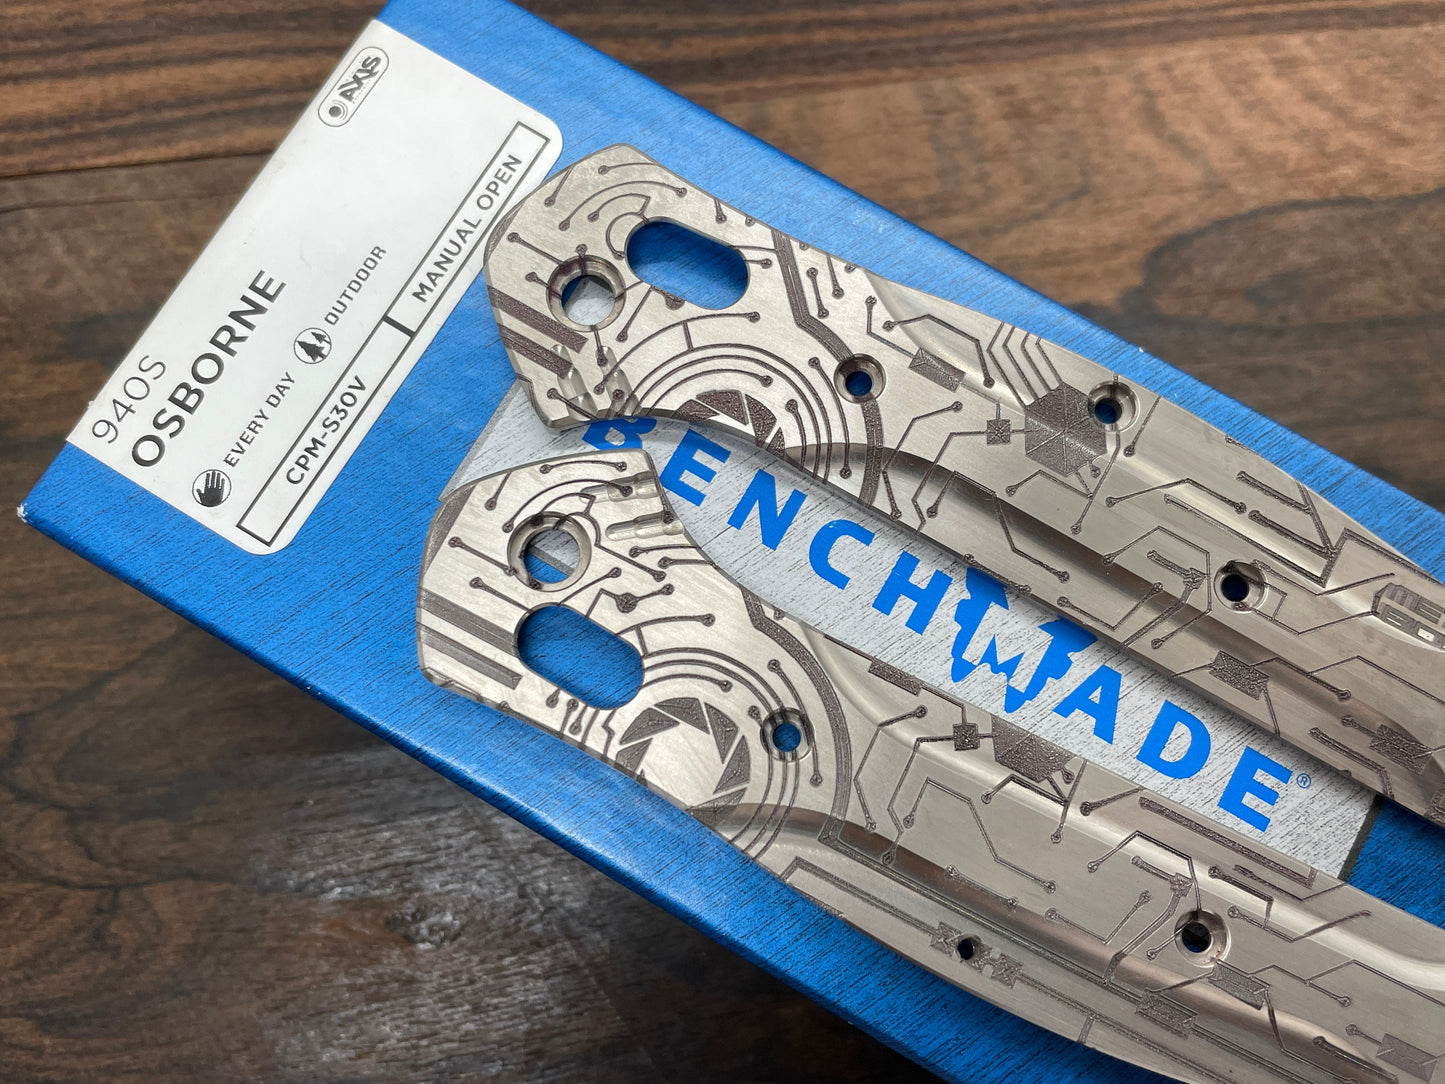 CIRCUIT BOARD engraved Titanium Scales for Benchmade 940 Osborne